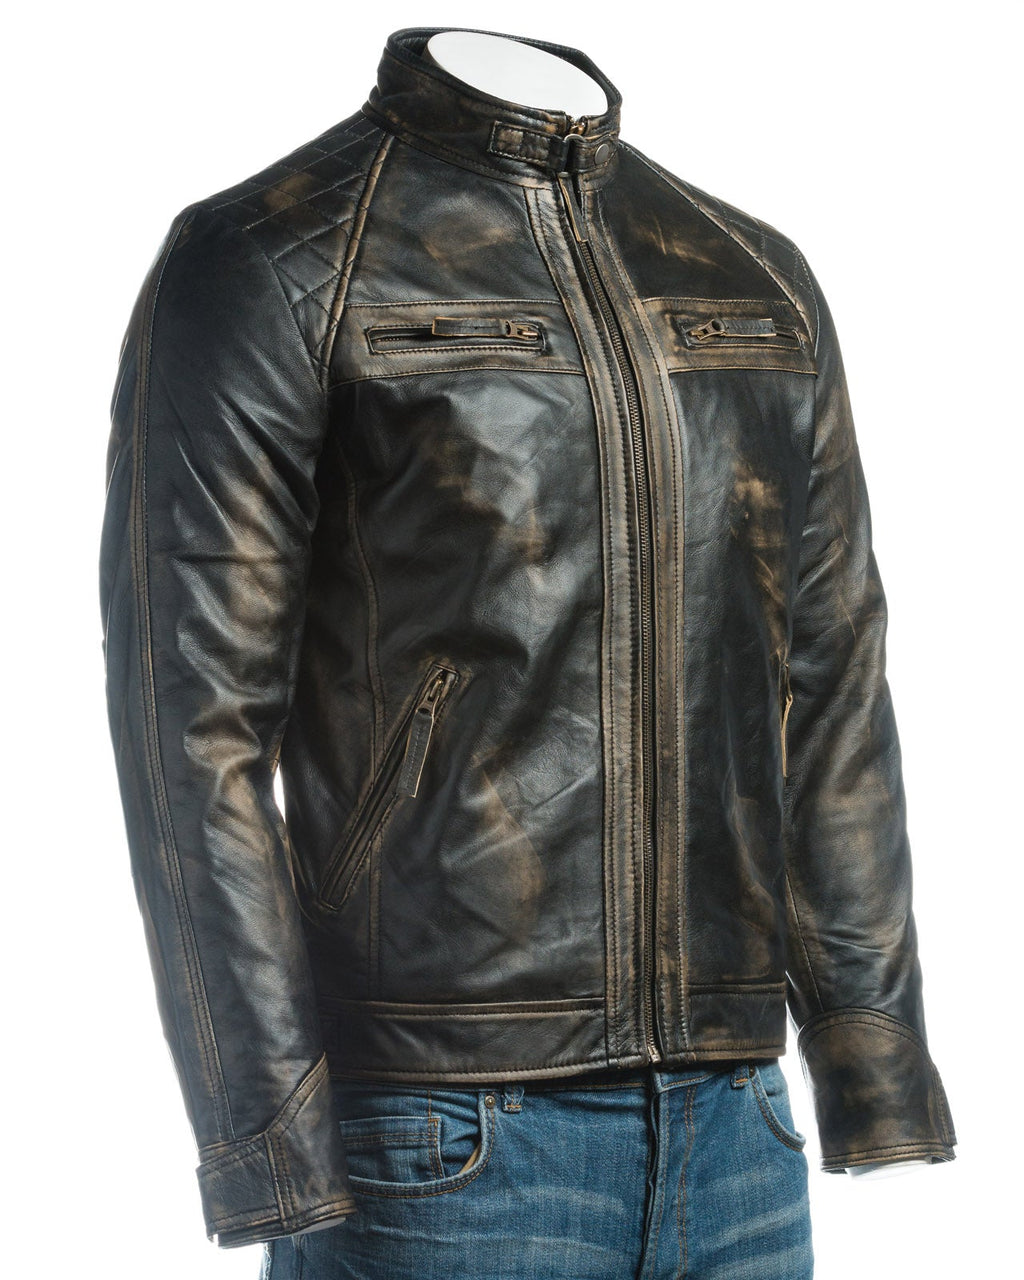 Men's Antique Black Diamond Shoulder Biker Style Leather Jacket: Geronimo